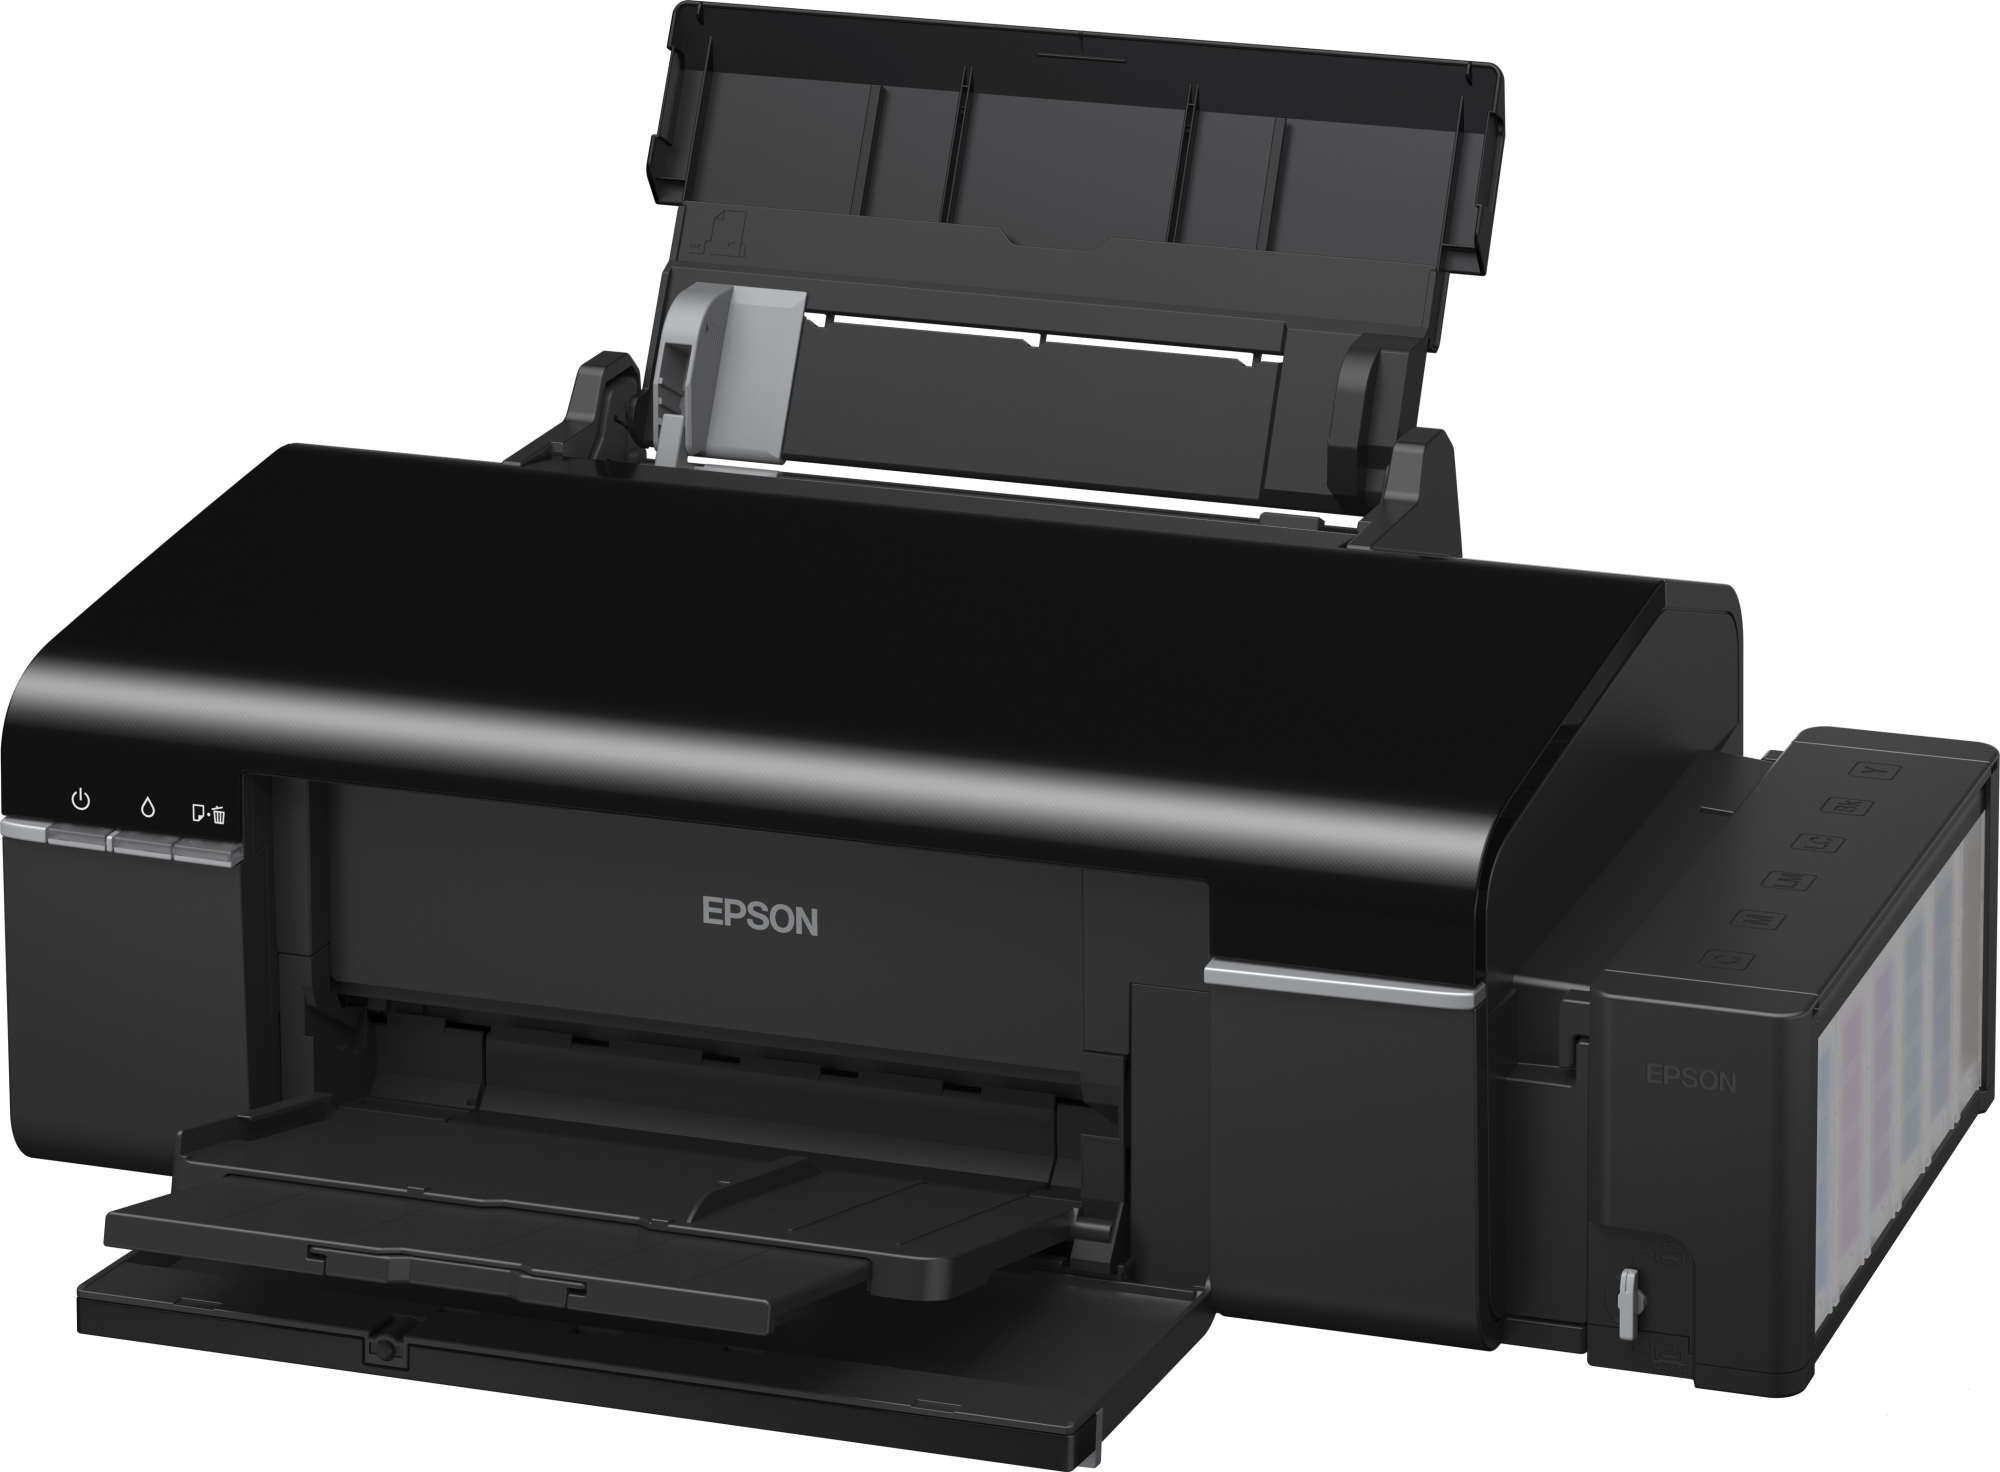 Epson l800 печать. Epson l800. Принтер Эпсон l800. Принтер Эпсон 805. Струйный принтер Epson l800.